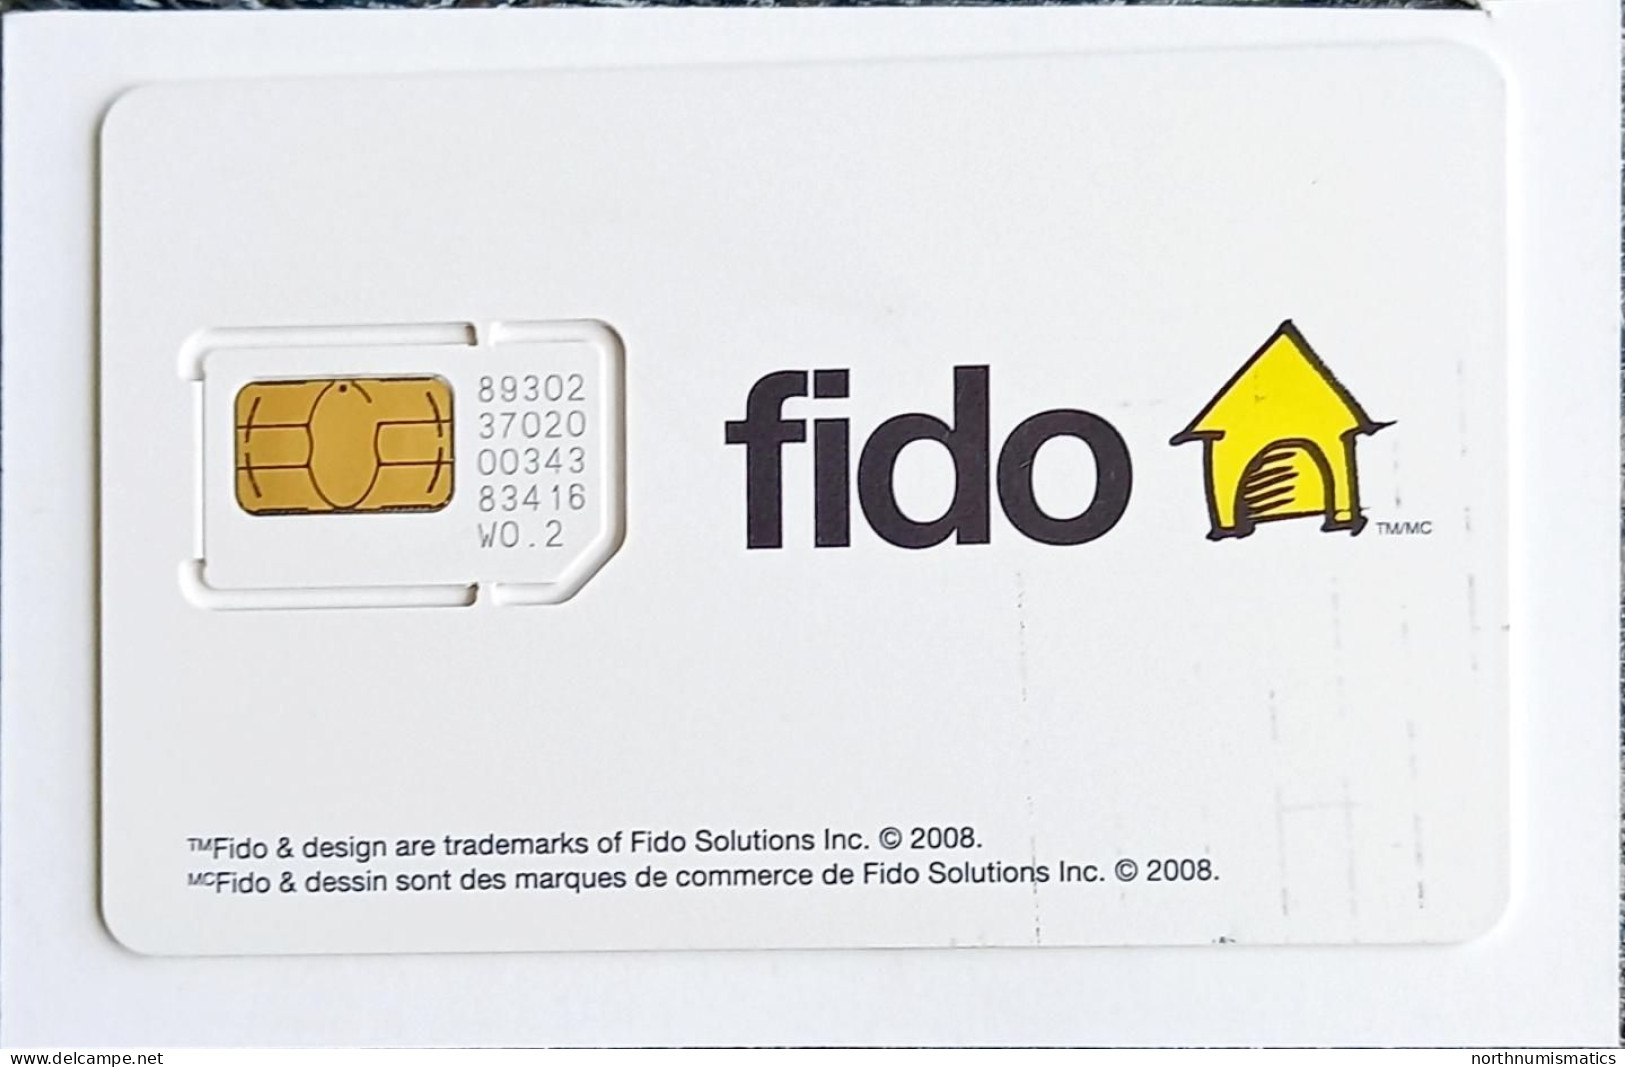 Canada Fido Gsm Original Chip Sim Card - Lots - Collections